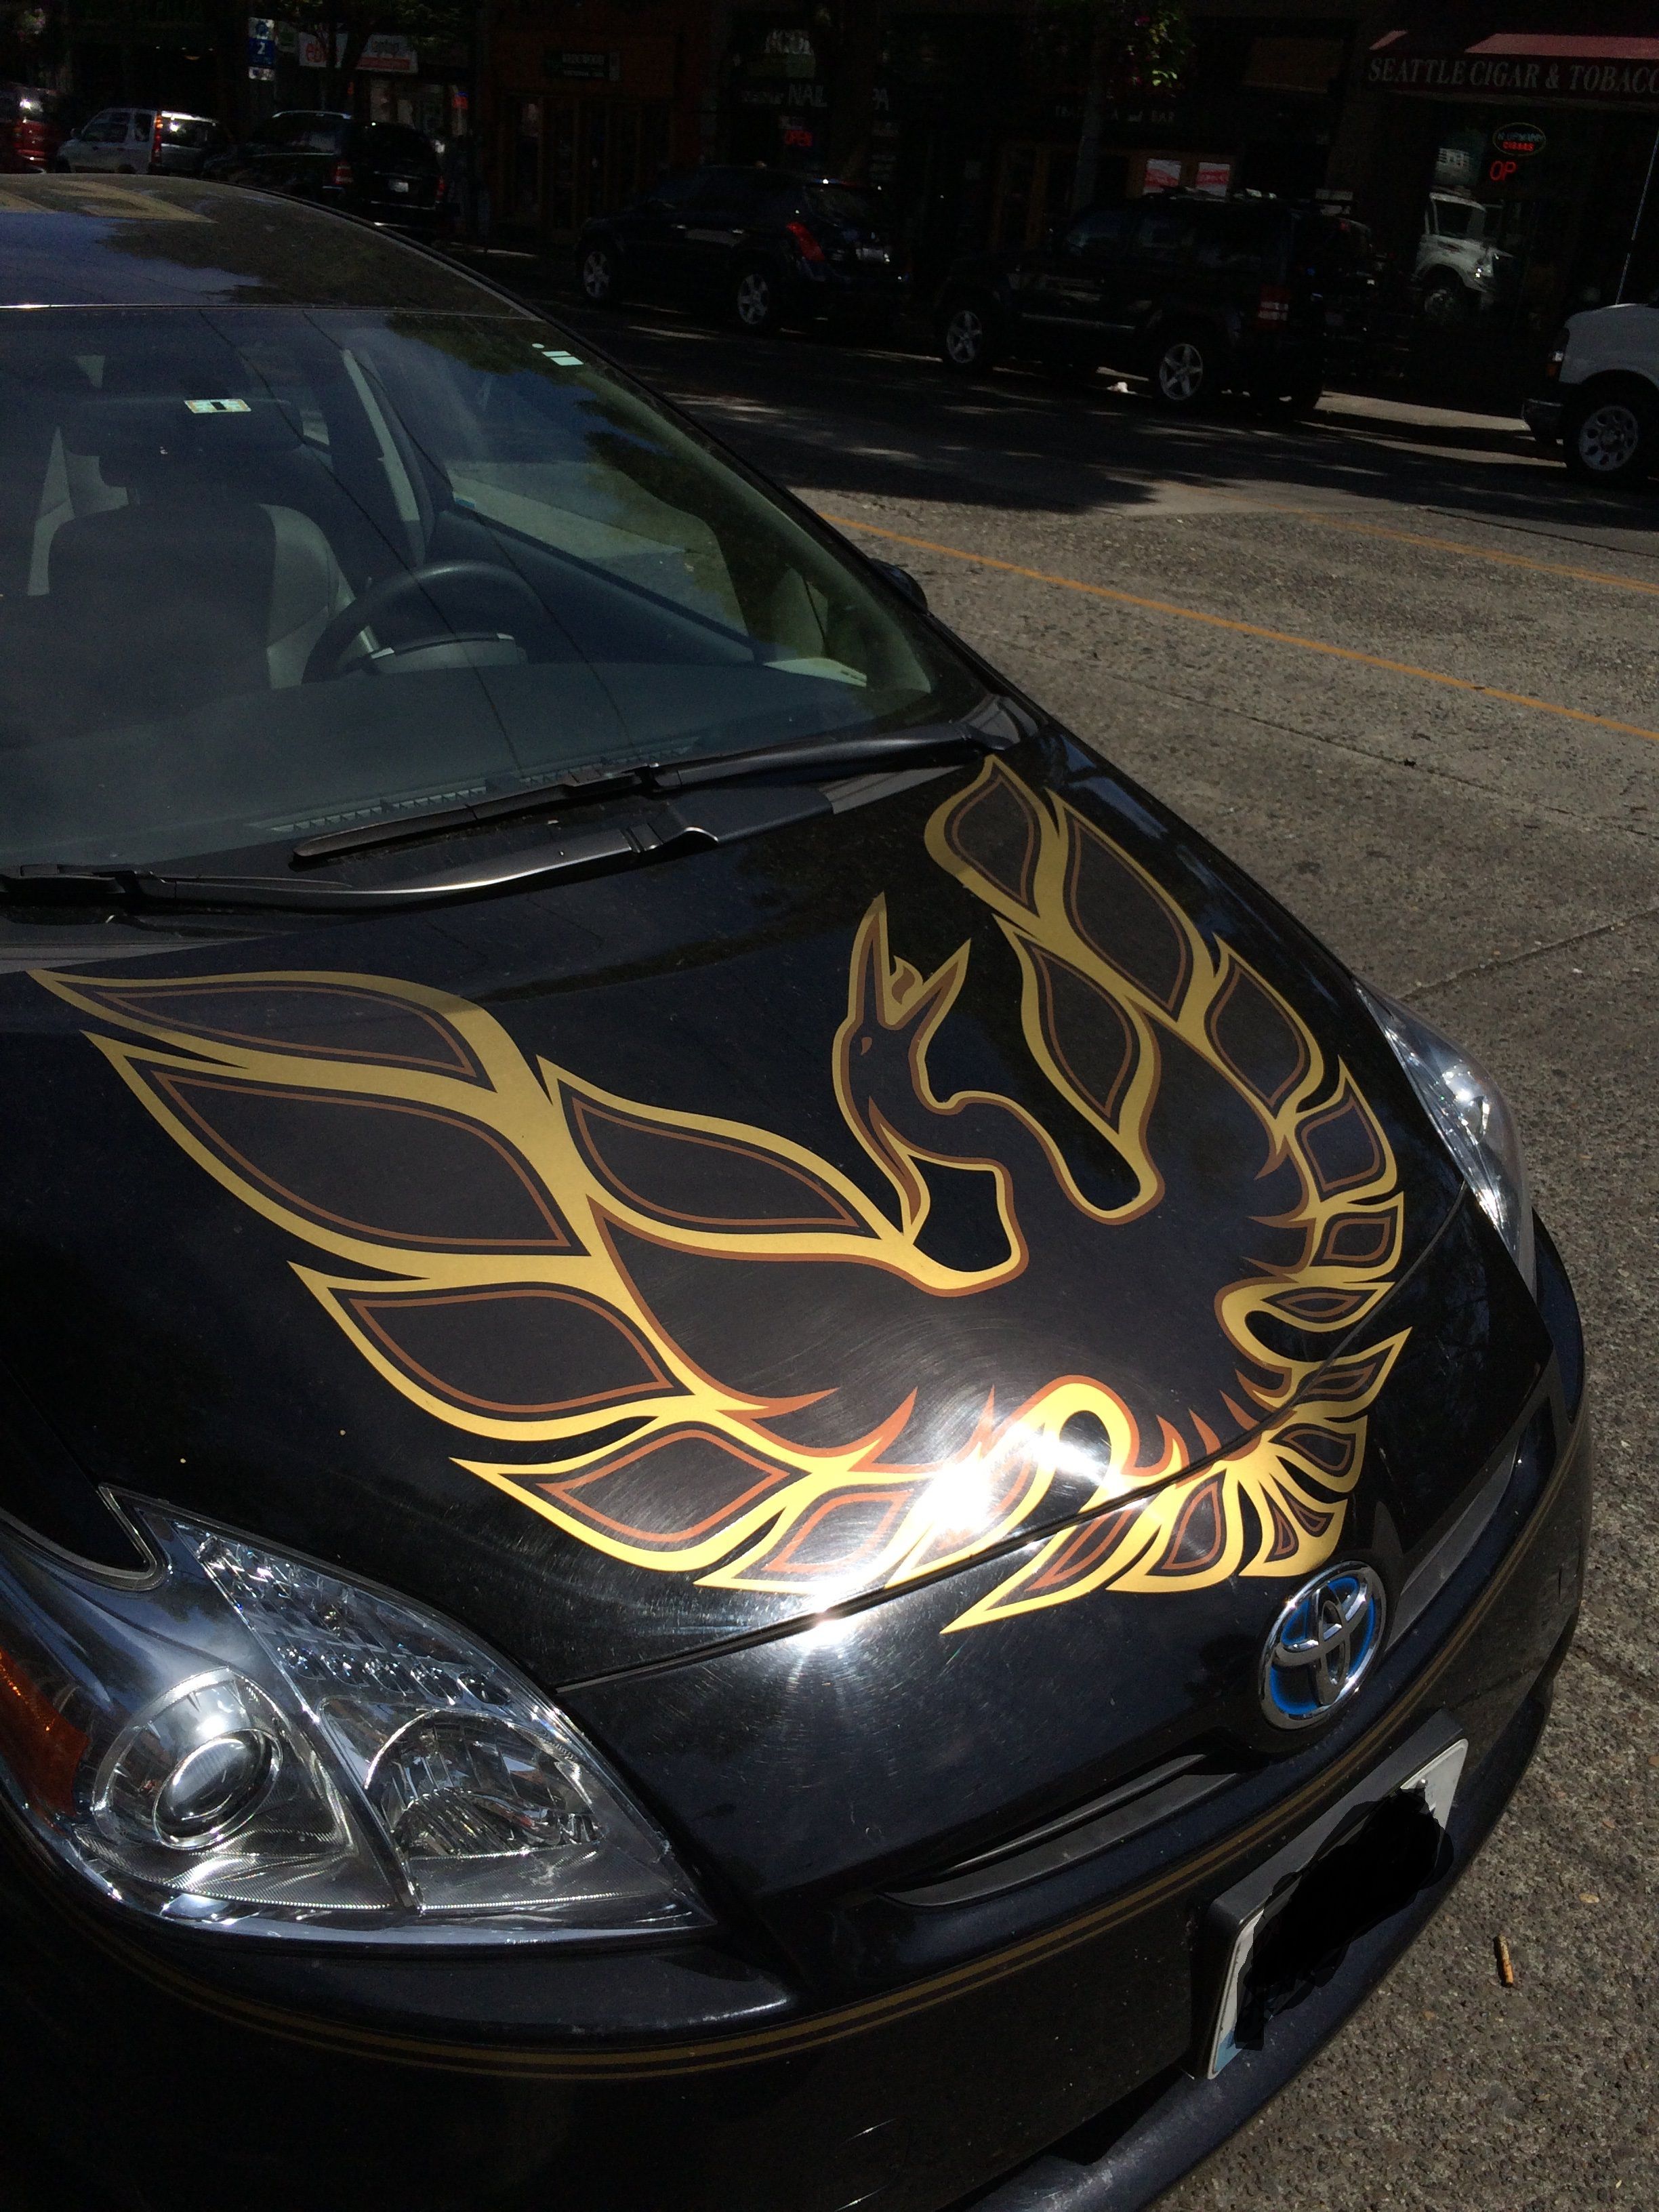 Trans Am bird on hood of a Prius